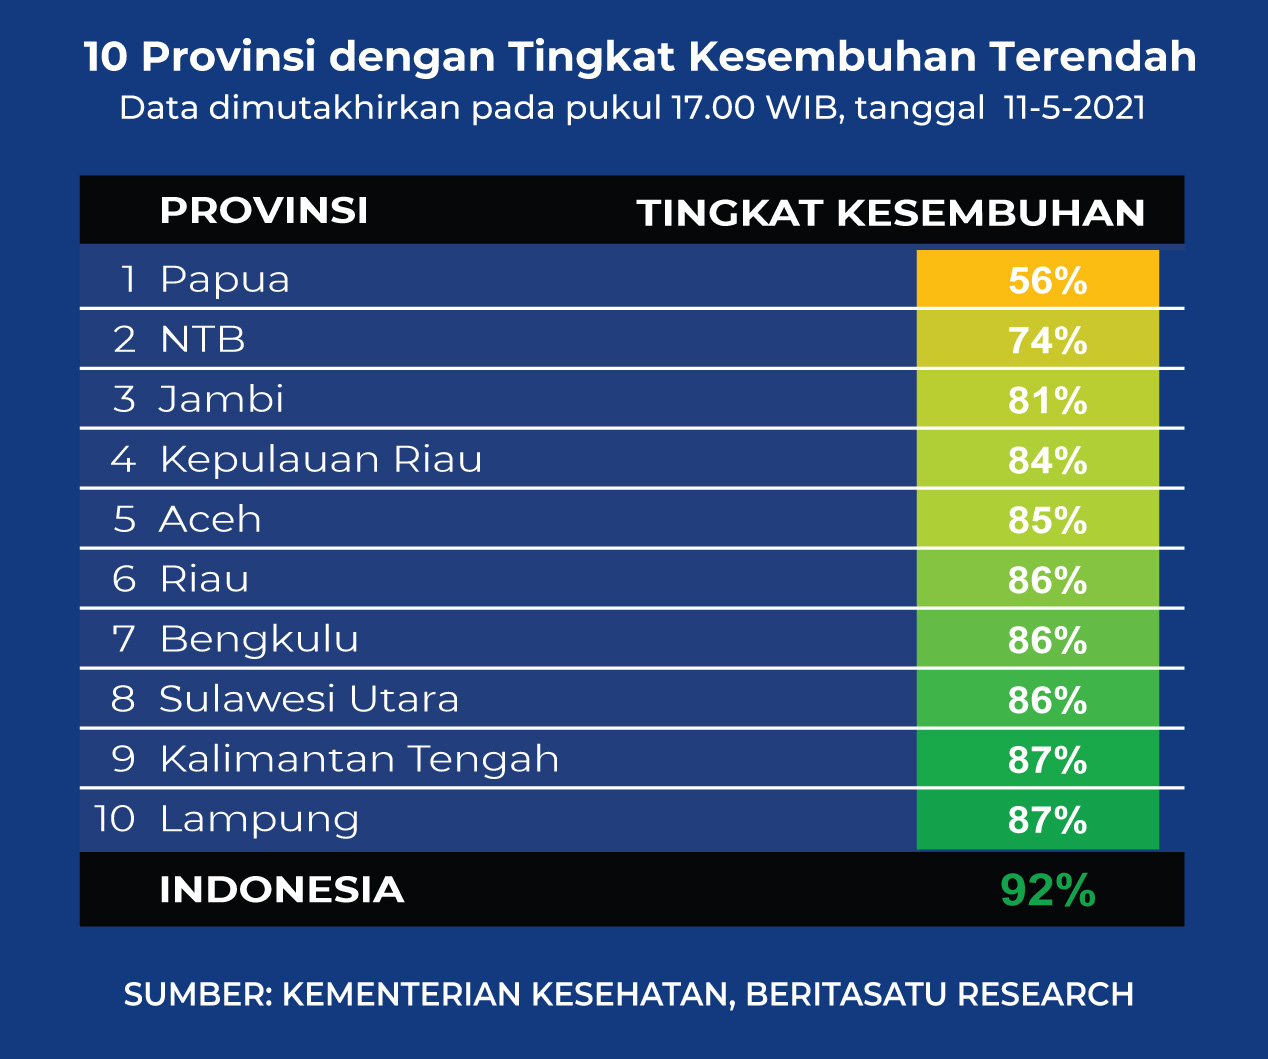 Data 10 Provinsi dengan Tingkat Kesembuhan Terendah Covid-19 pada 11 Mei 2021